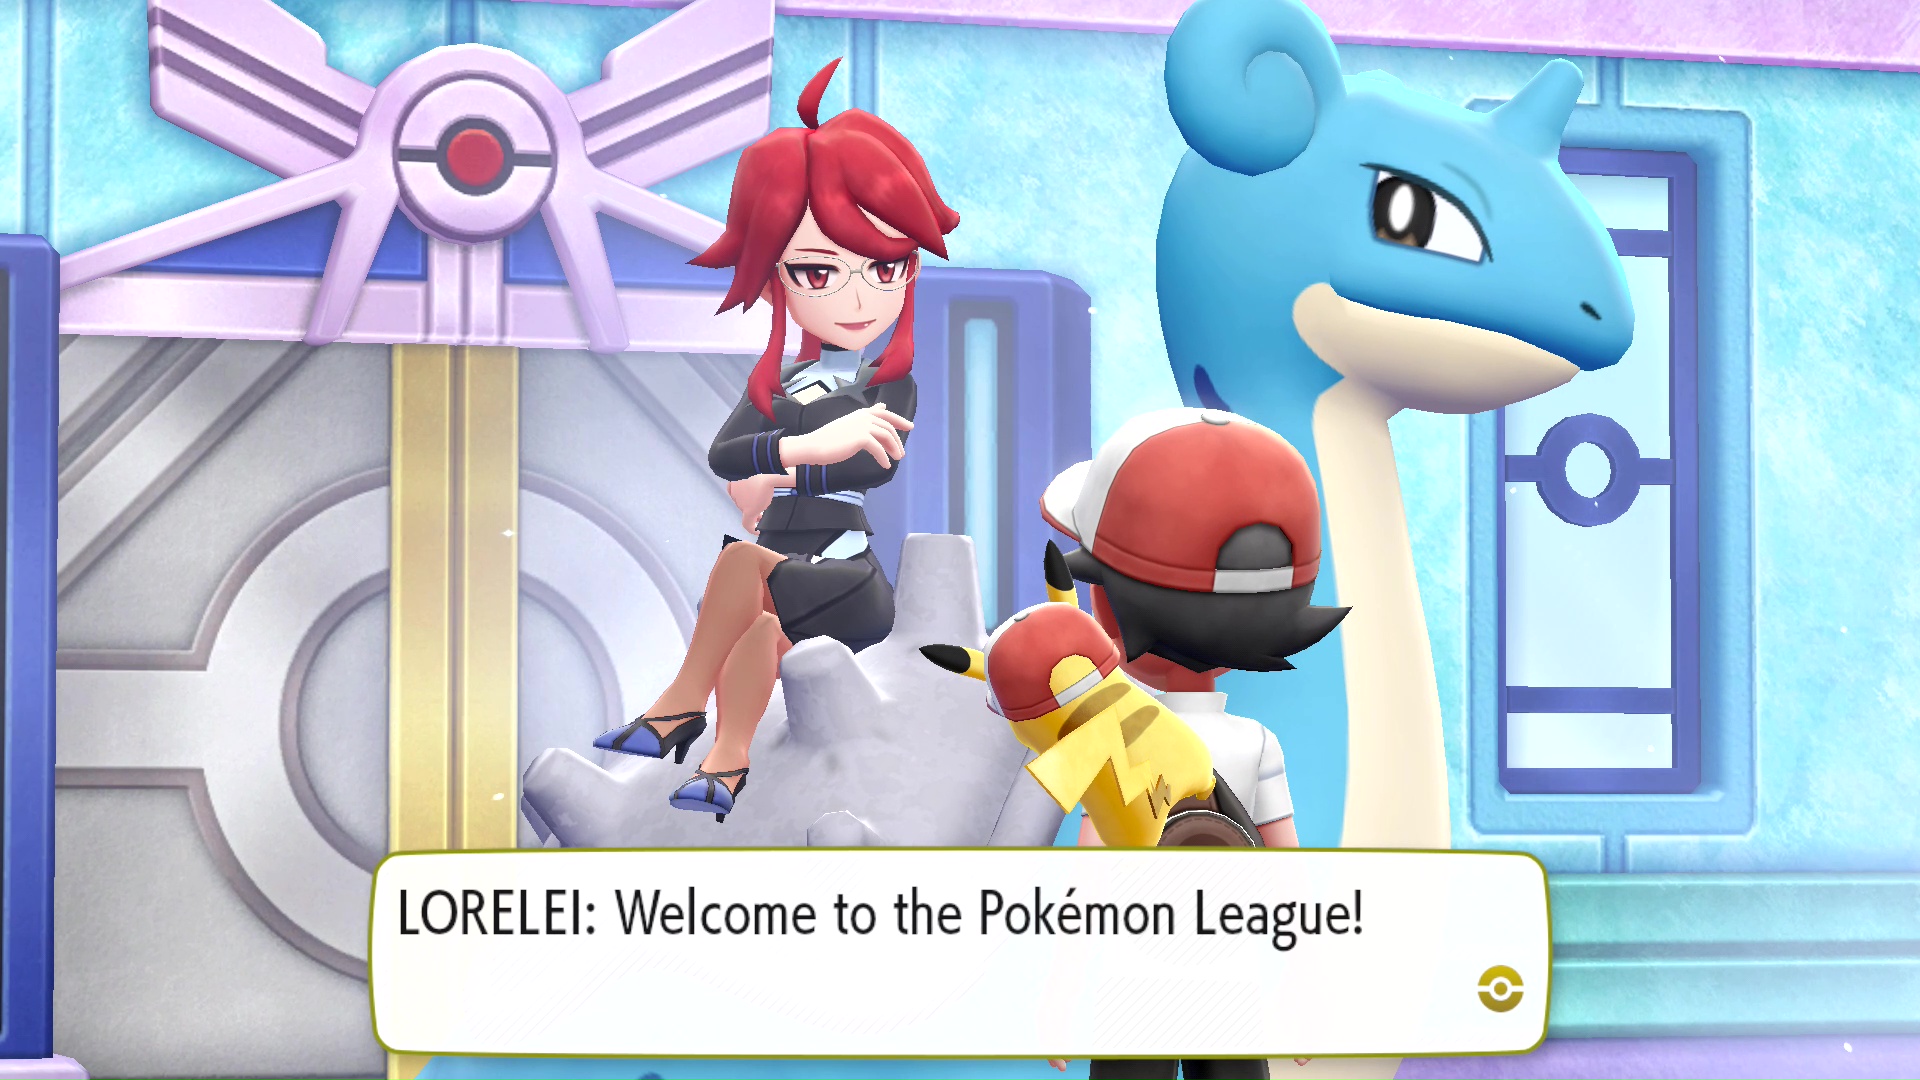 Lorelei specializes in ice-type Pokemon. 